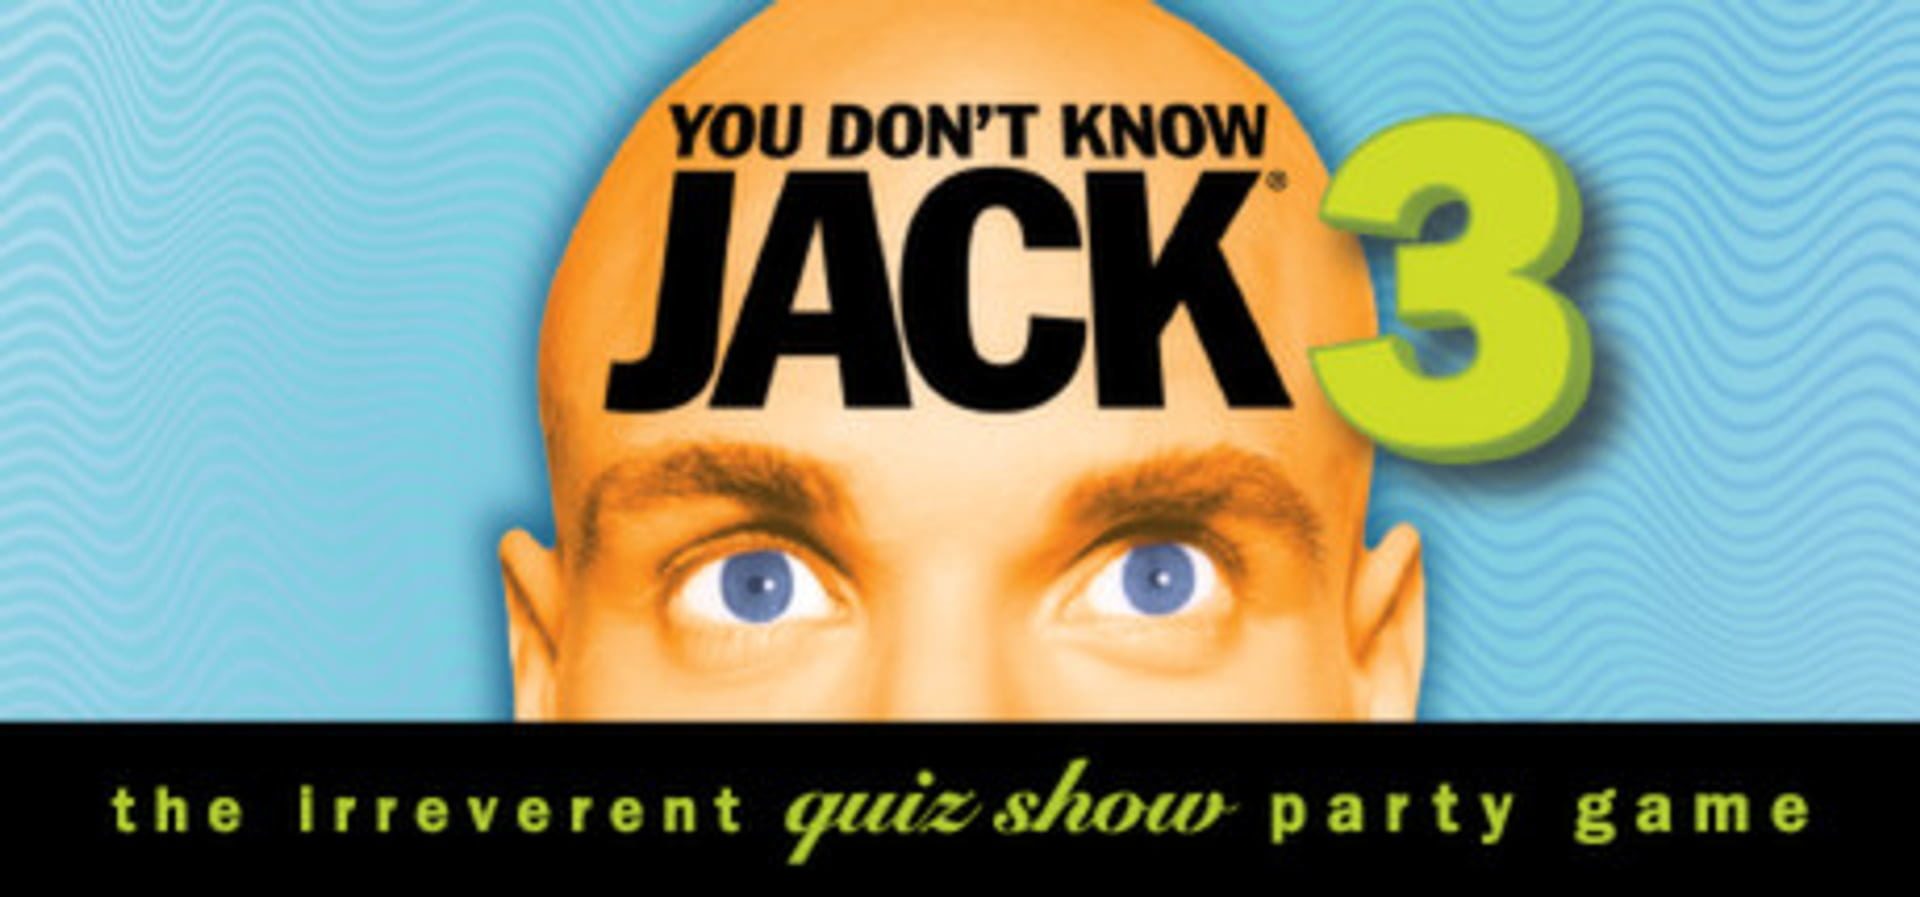 Know игра. You don't know Jack Vol 1. You don't know Jack Jackbox. You don't know Jack ps1. Вы не знаете Джека Постер.